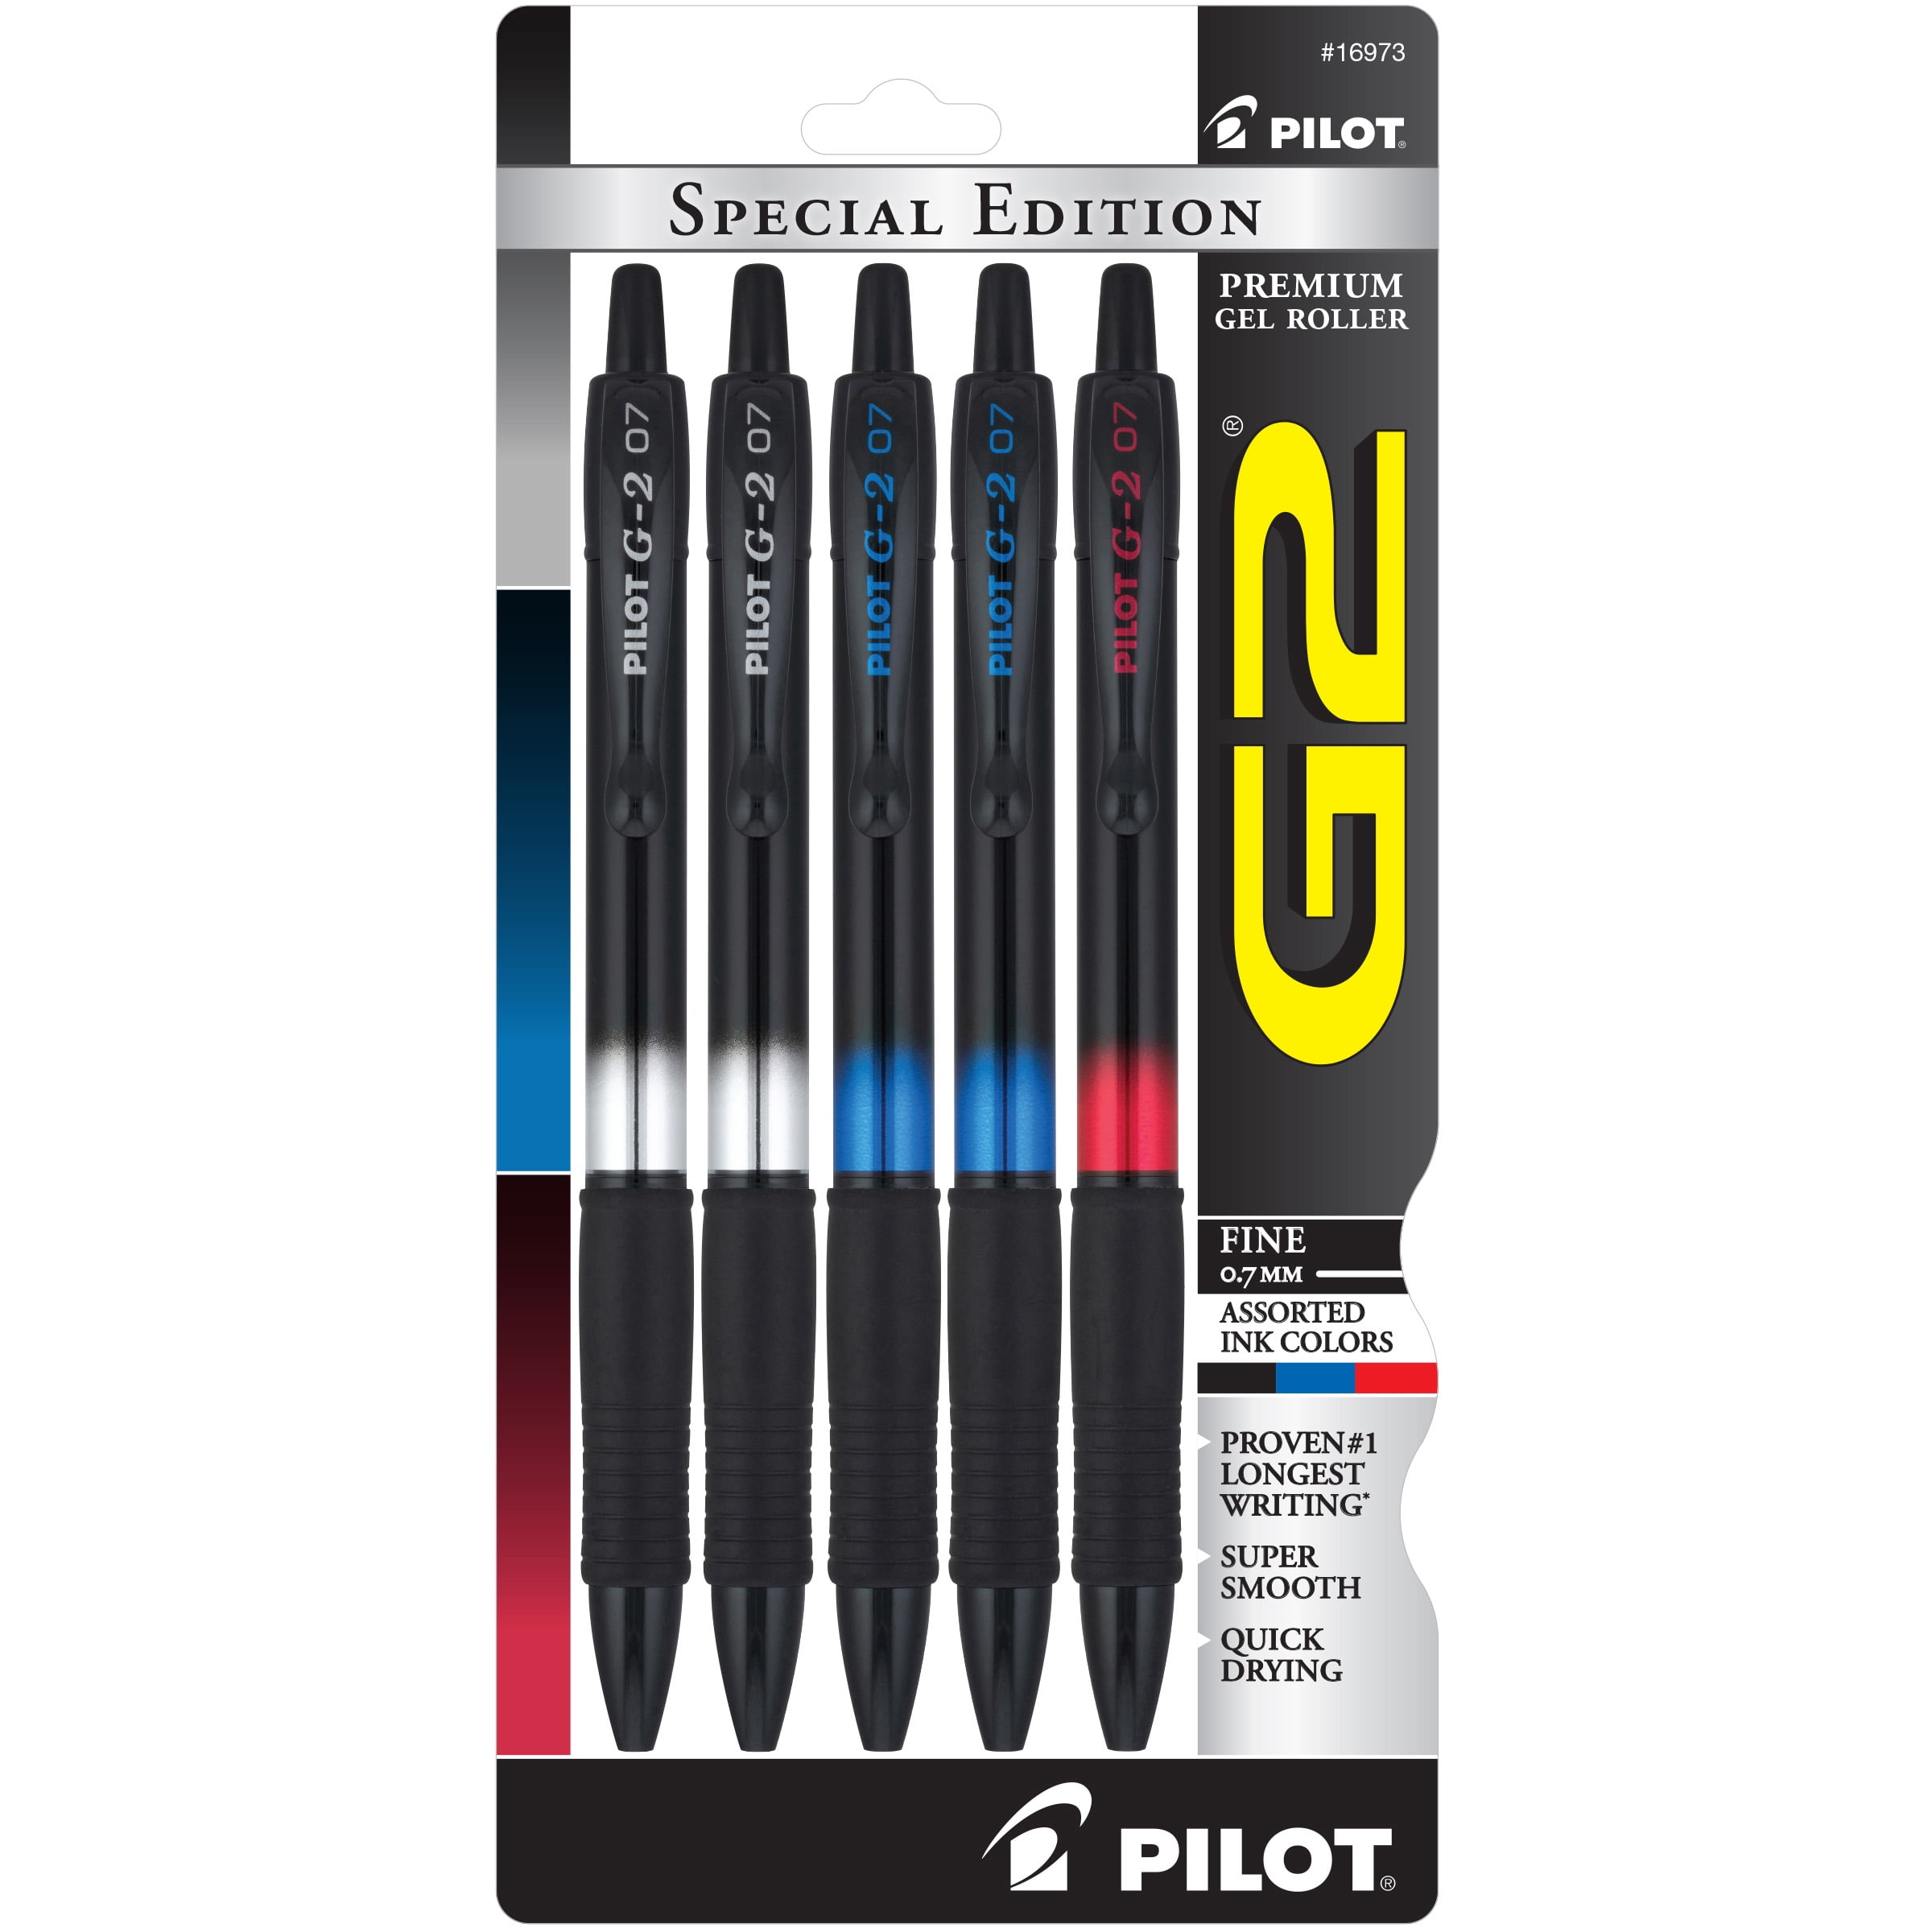 Pilot G2 Pens Custom Printed with Logo for Advertising